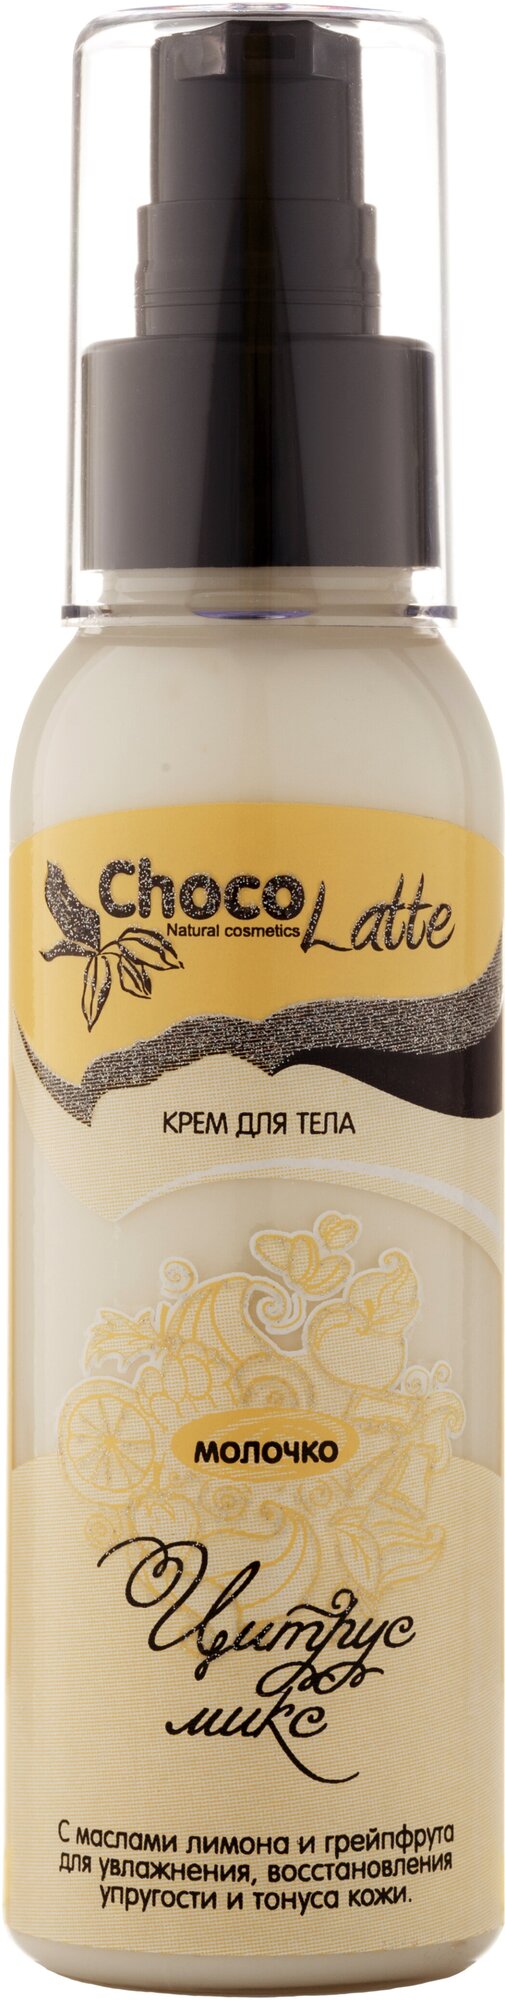 ChocoLatte крем-молочко для тела цитрус-микс, 100ml